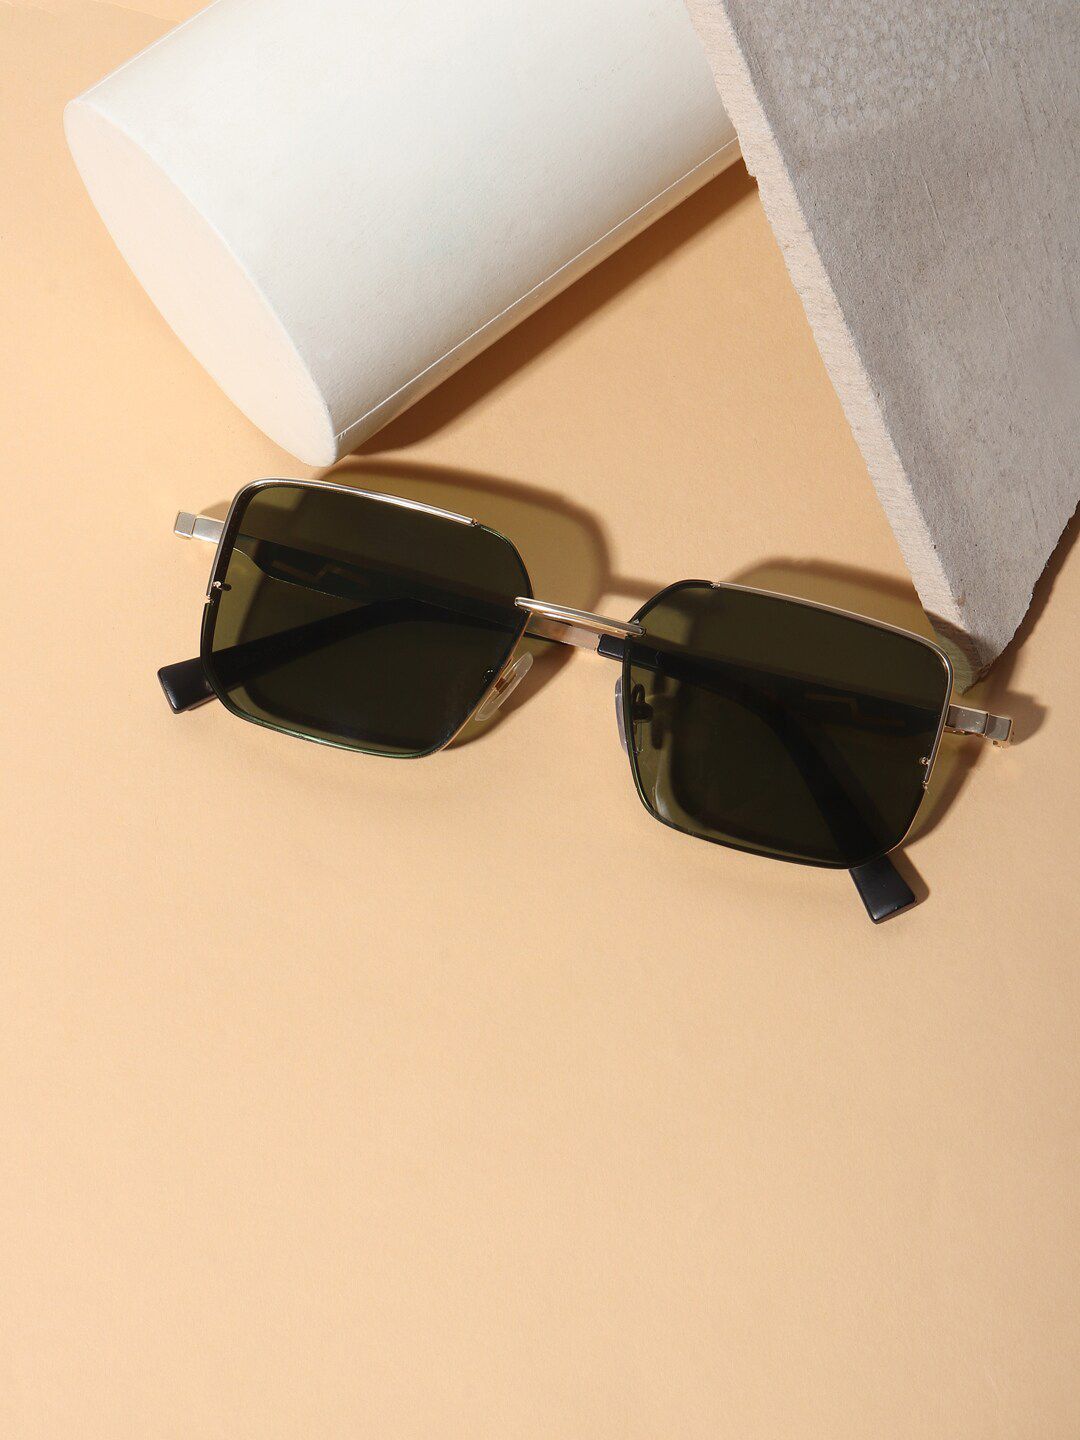 Karsaer Flat Top TR90 Polarized Sports Men Sunglasses Vintage